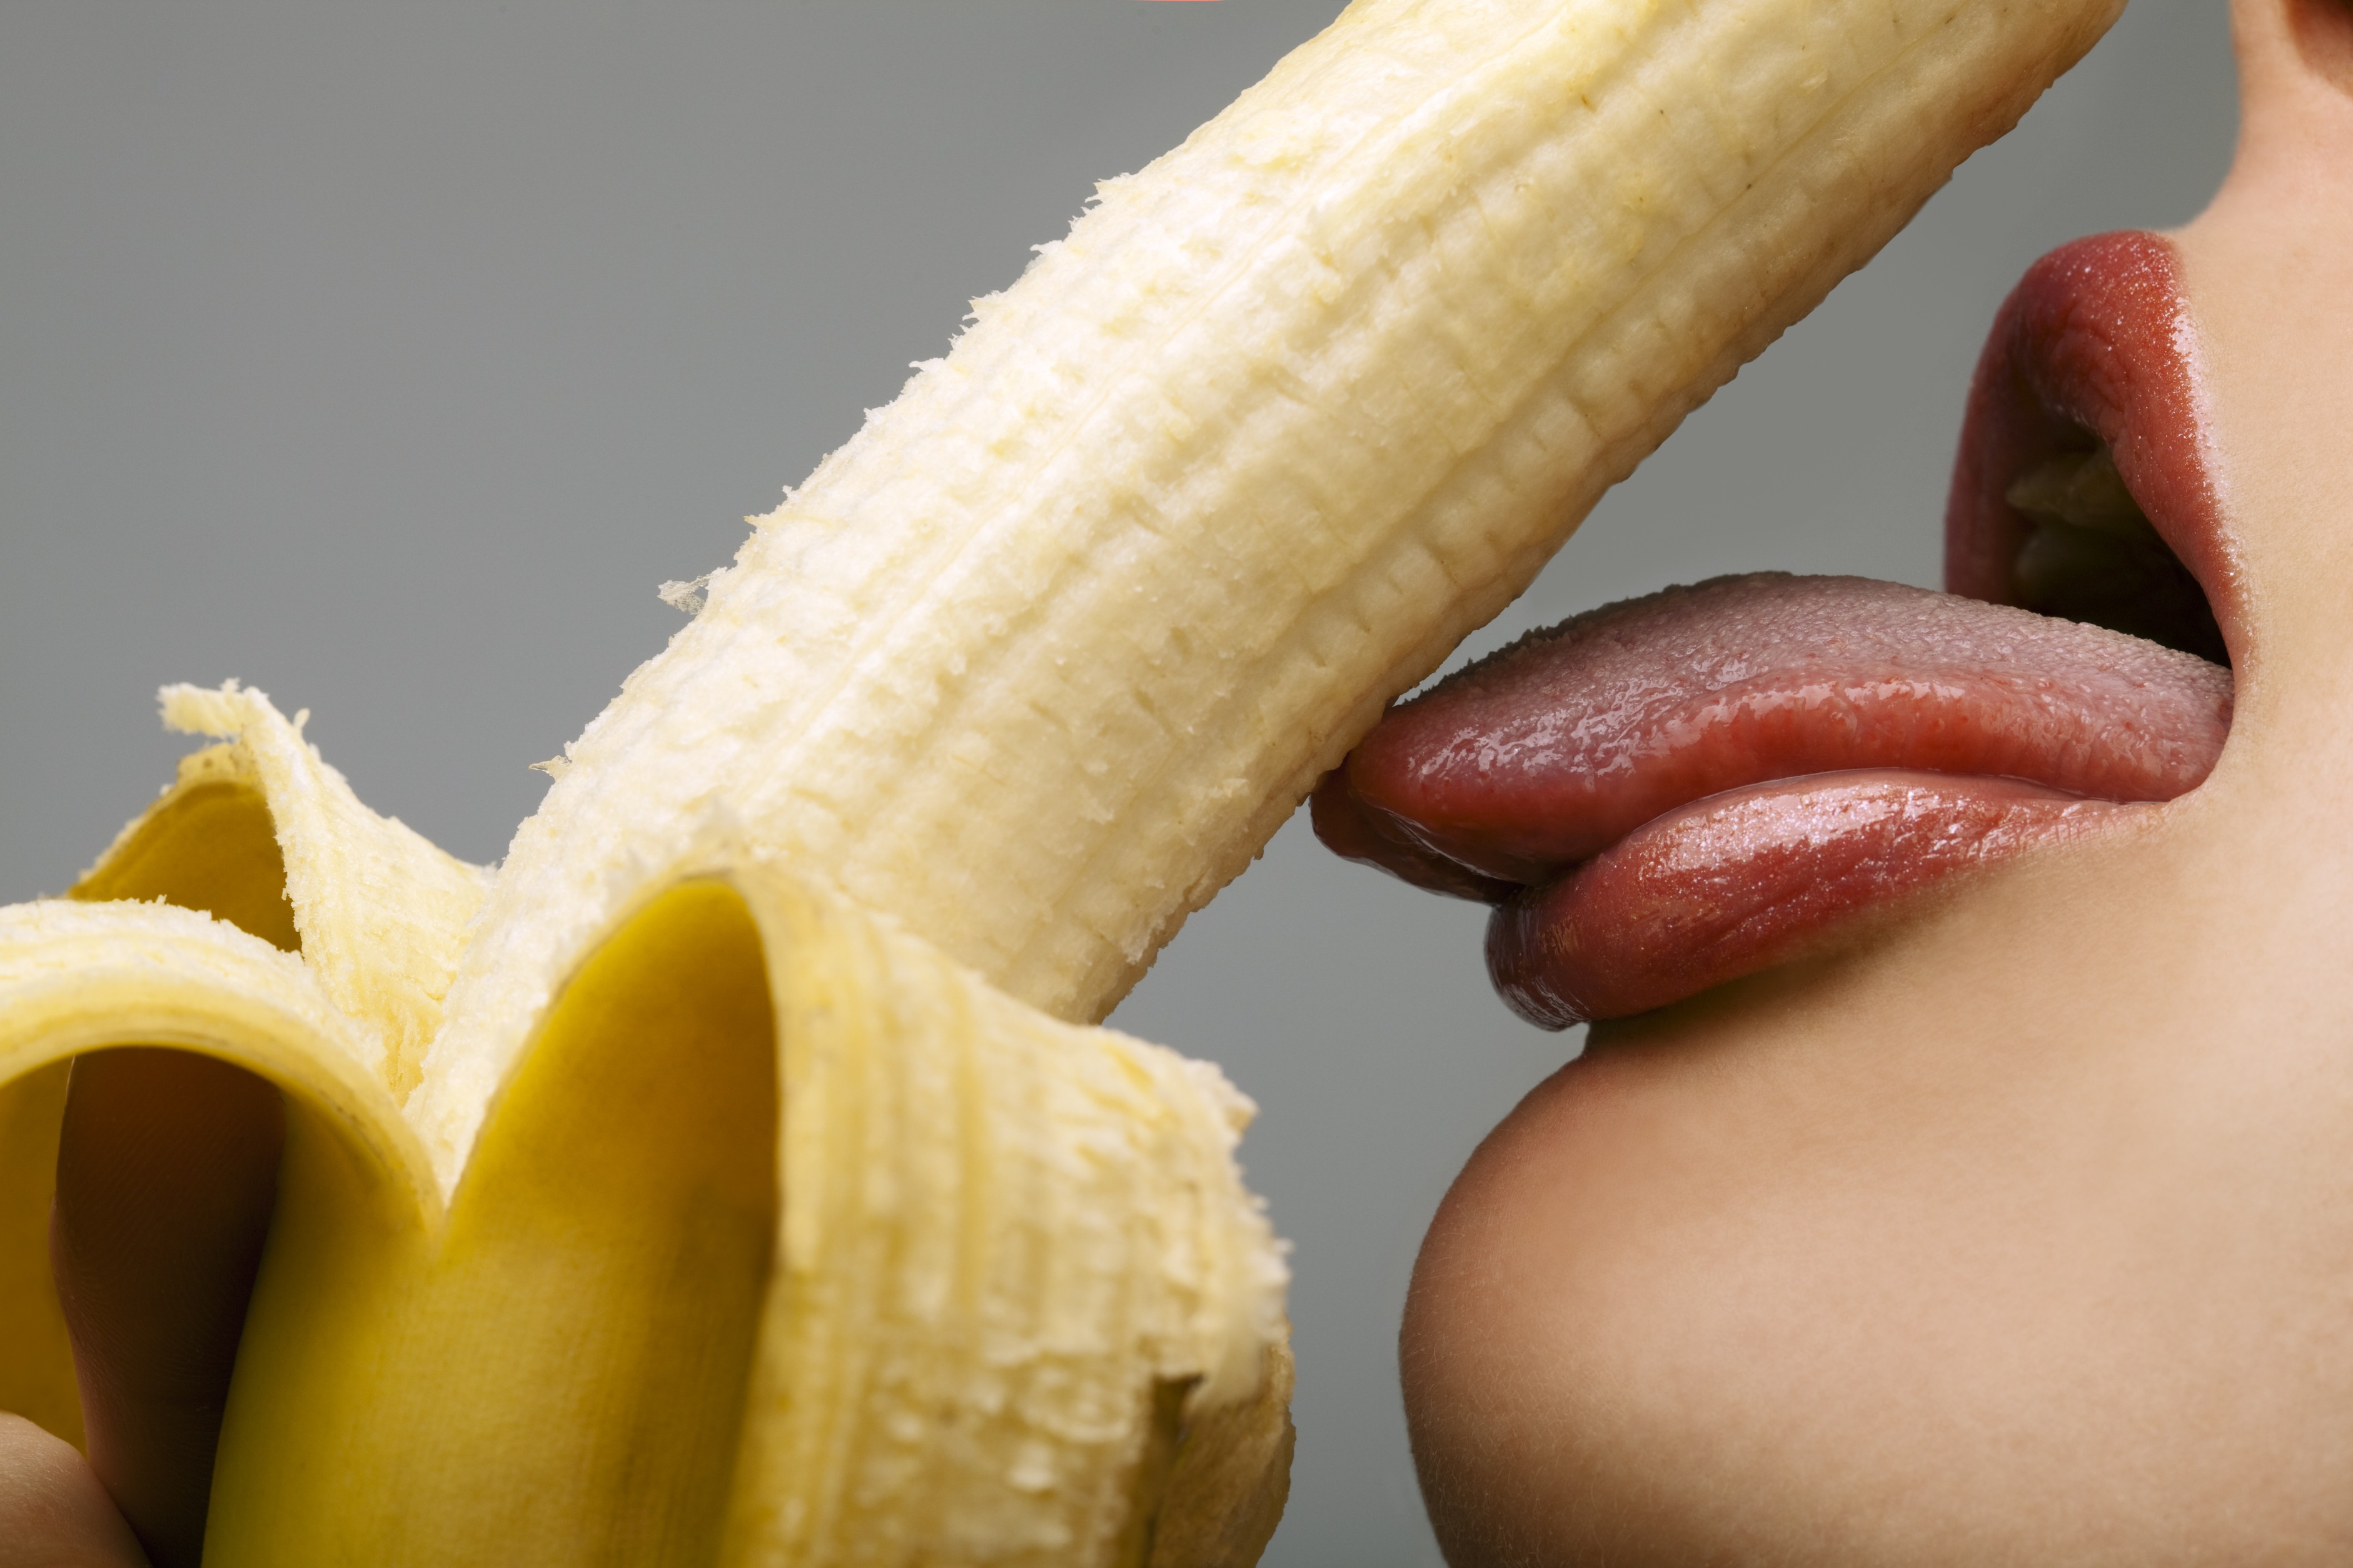 People 3763x2508 phallic symbol licking tongues lips fruit bananas women juicy lips yellow closeup